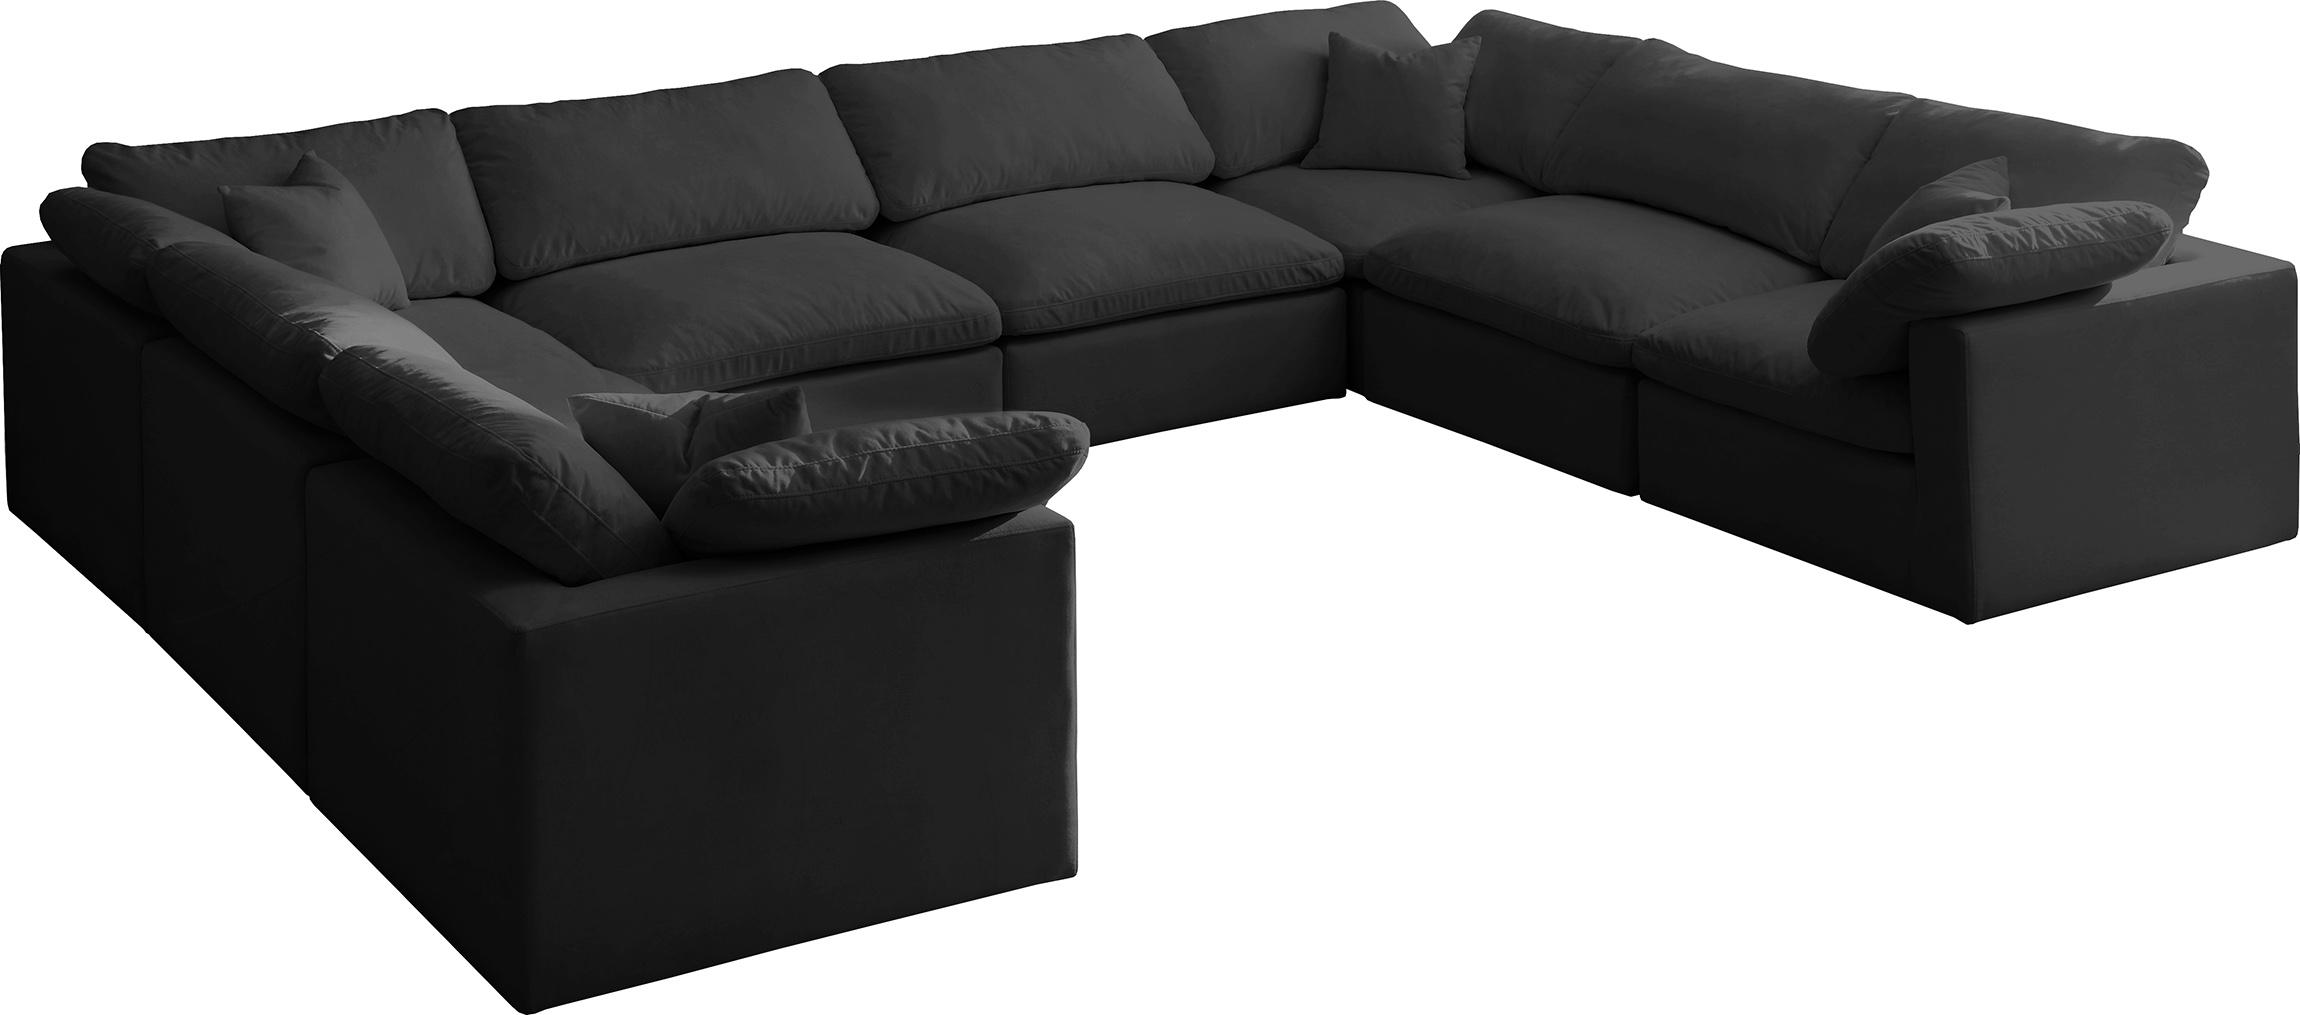 Soflex Cloud BLACK Modular Sectional Sofa